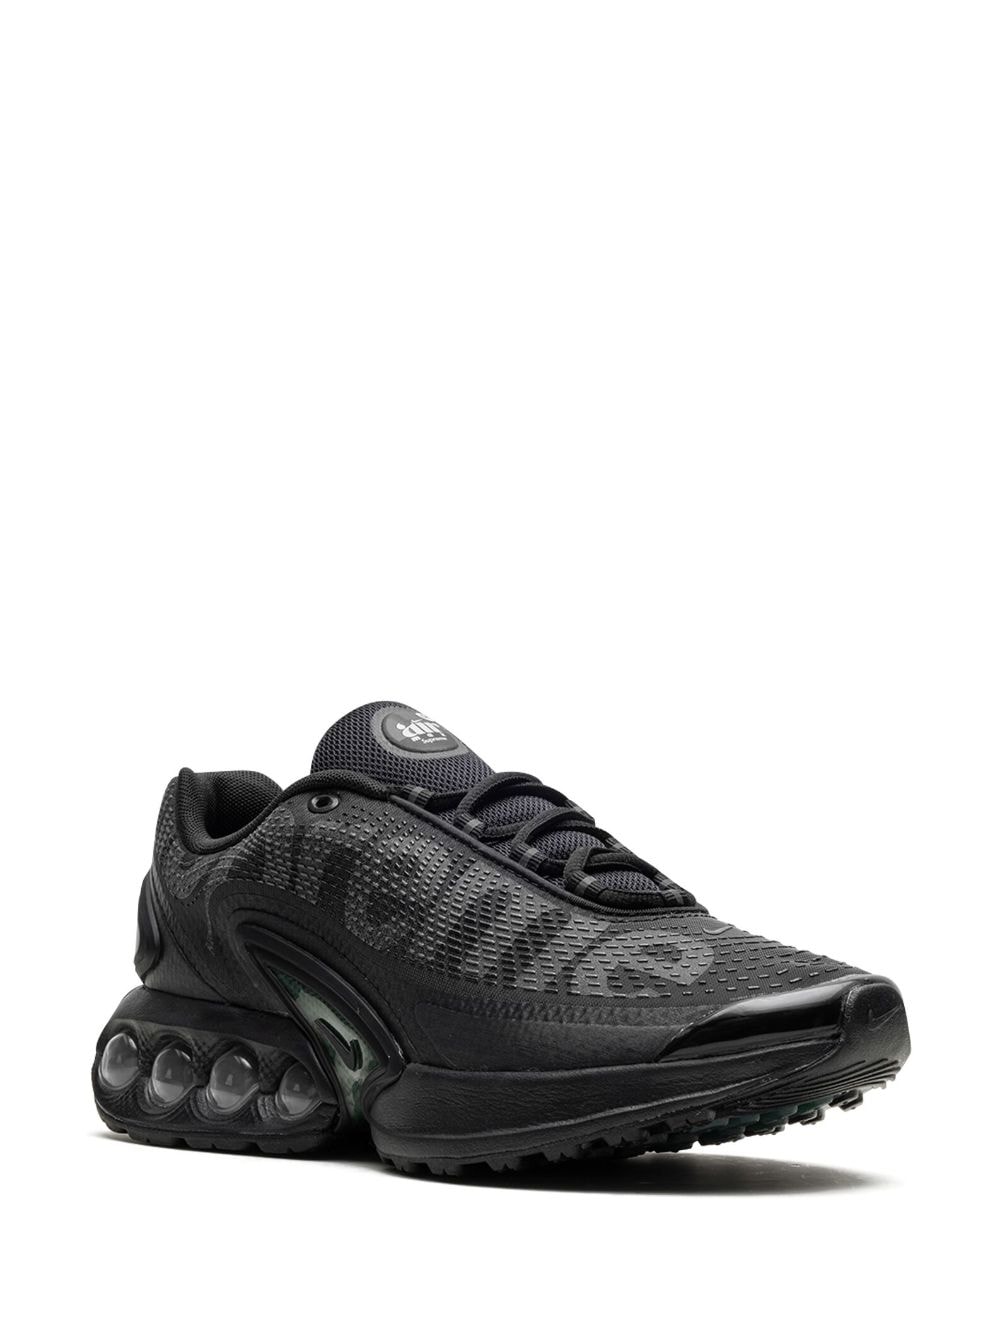 Image 2 of Nike x Supreme Air Max Dn "Black" sneakers